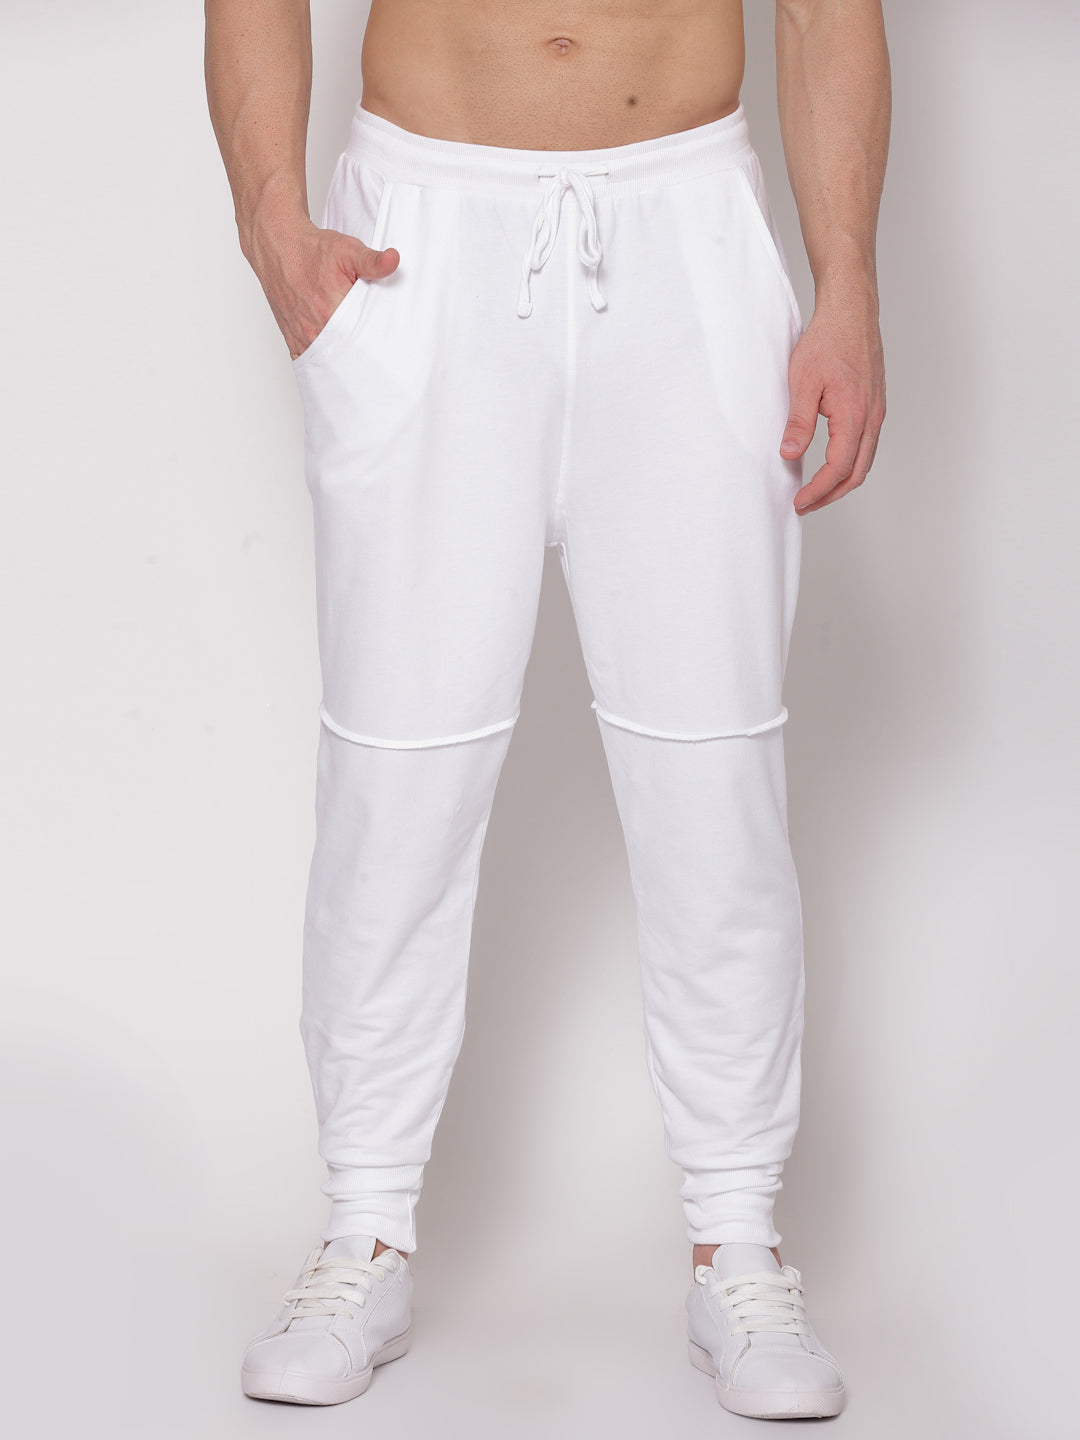 Buy White Track Pants for Men by FERANOID Online | Ajio.com